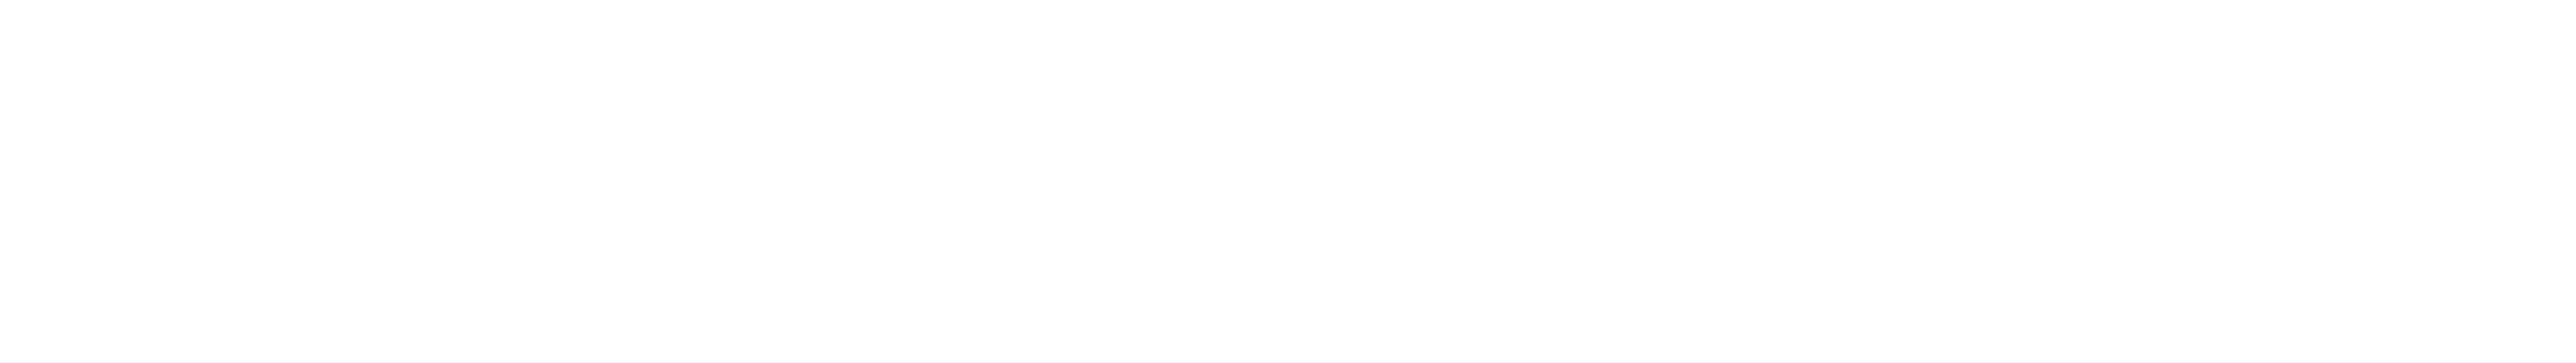 Portal gesut logo